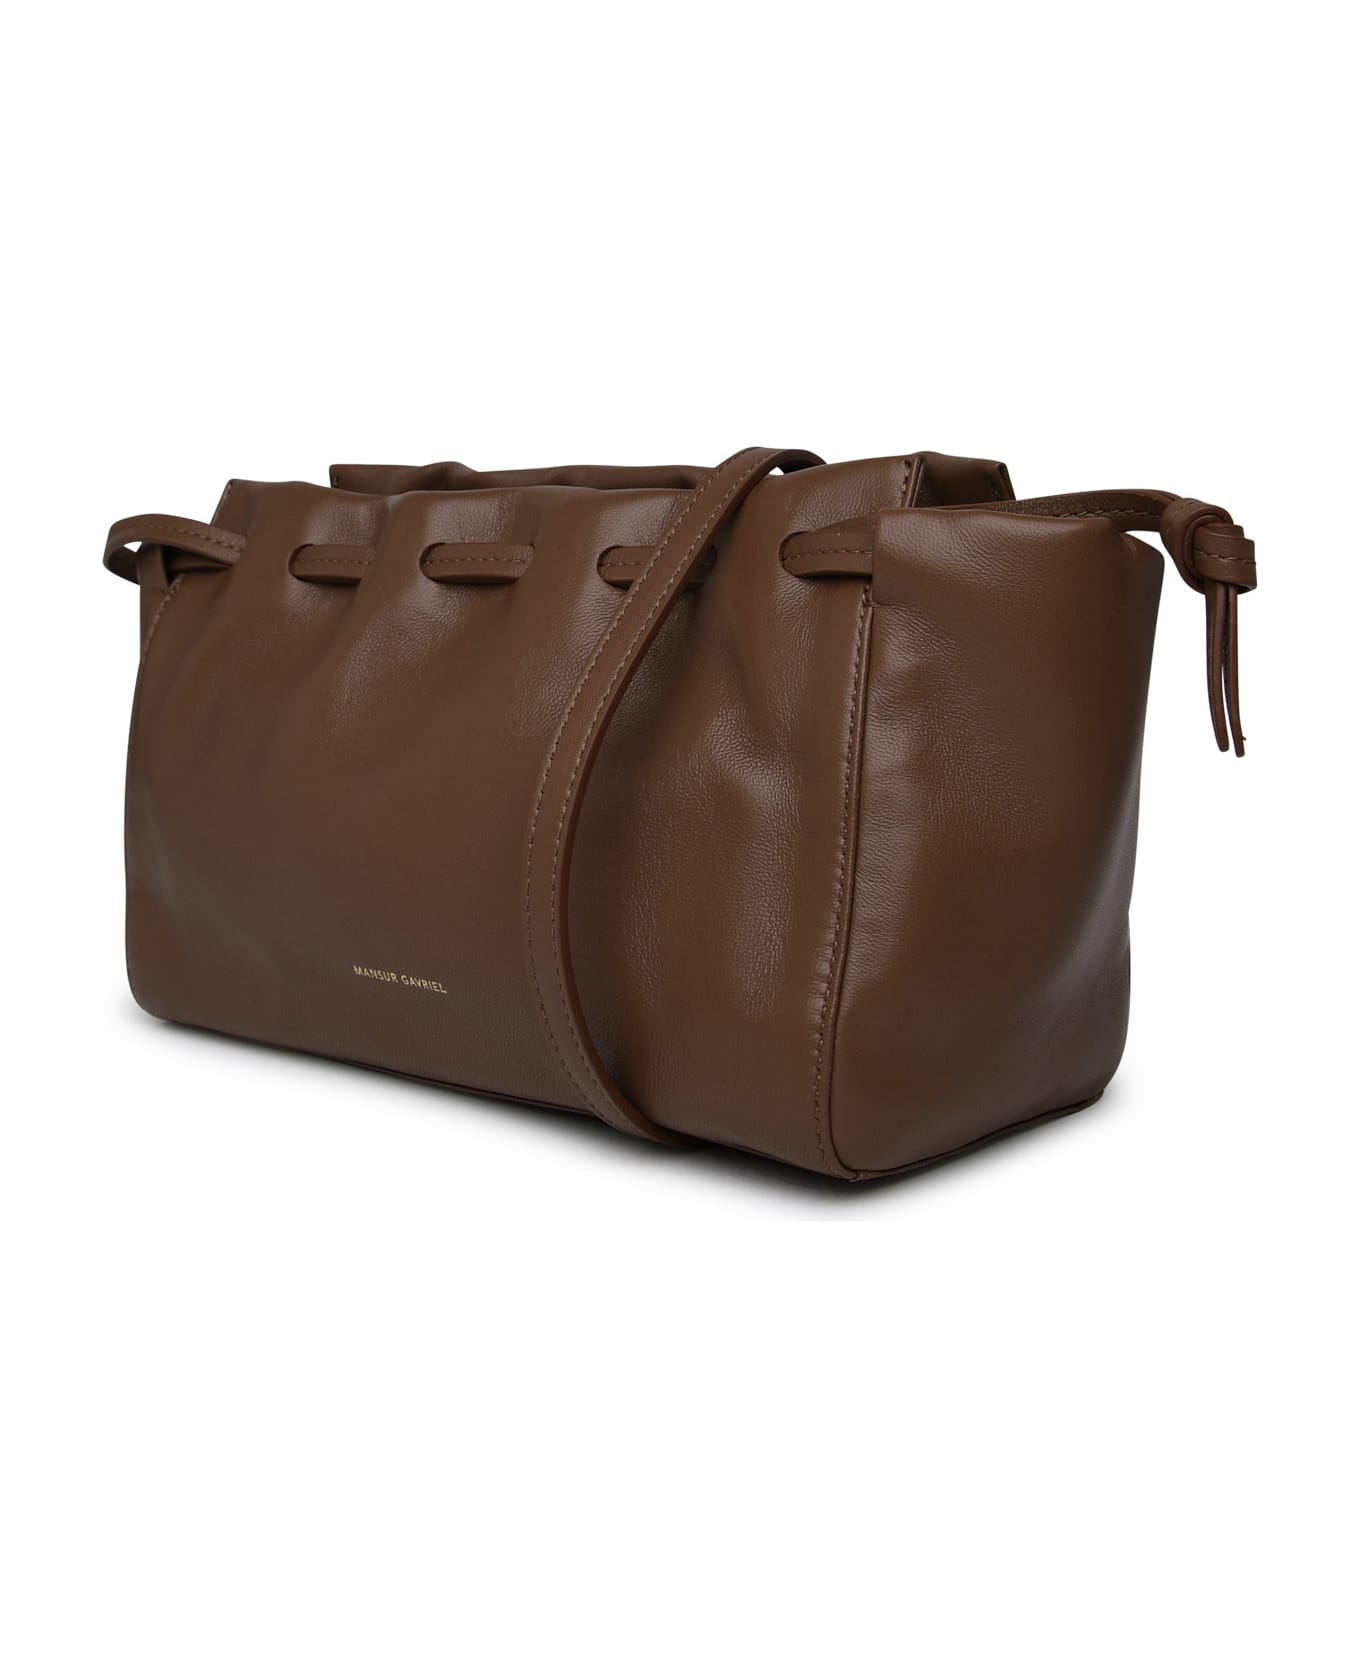 Mansur Gavriel 'bloom' Small Brown Leather Crossbody Bag - Brown クラッチバッグ